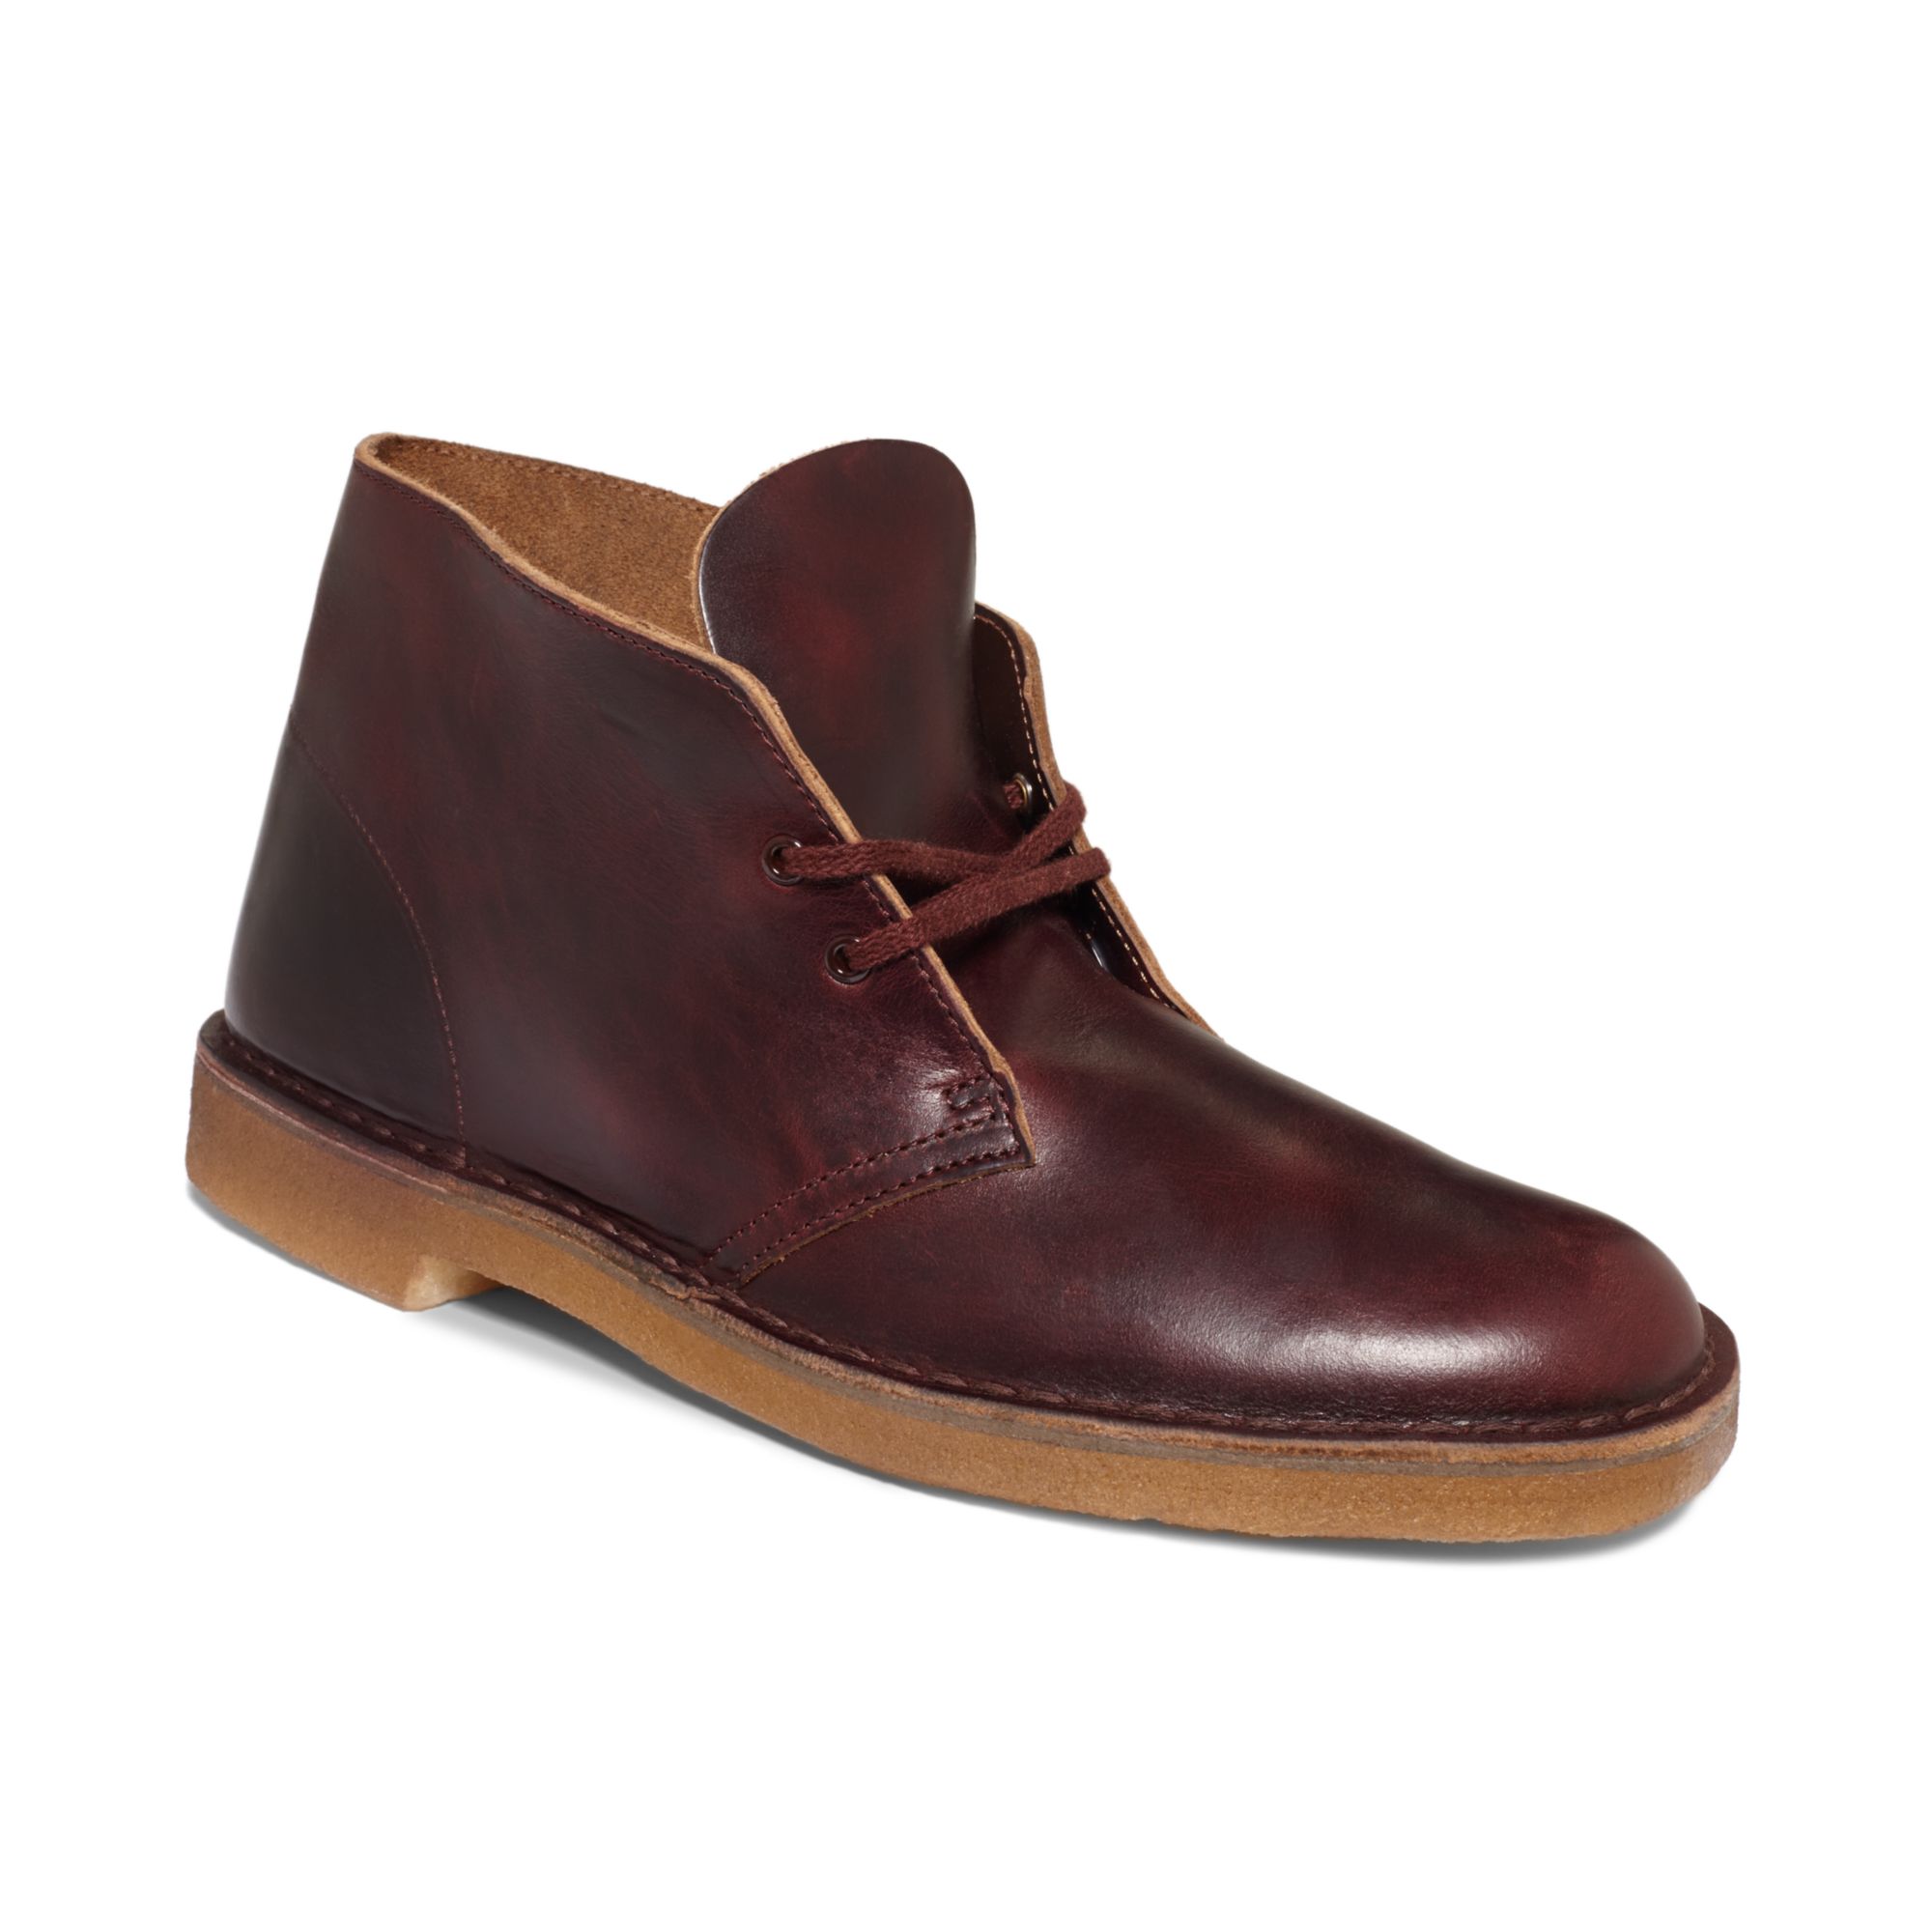 Clarks Originals Horween Leather Desert Boots in Red for Men - Lyst